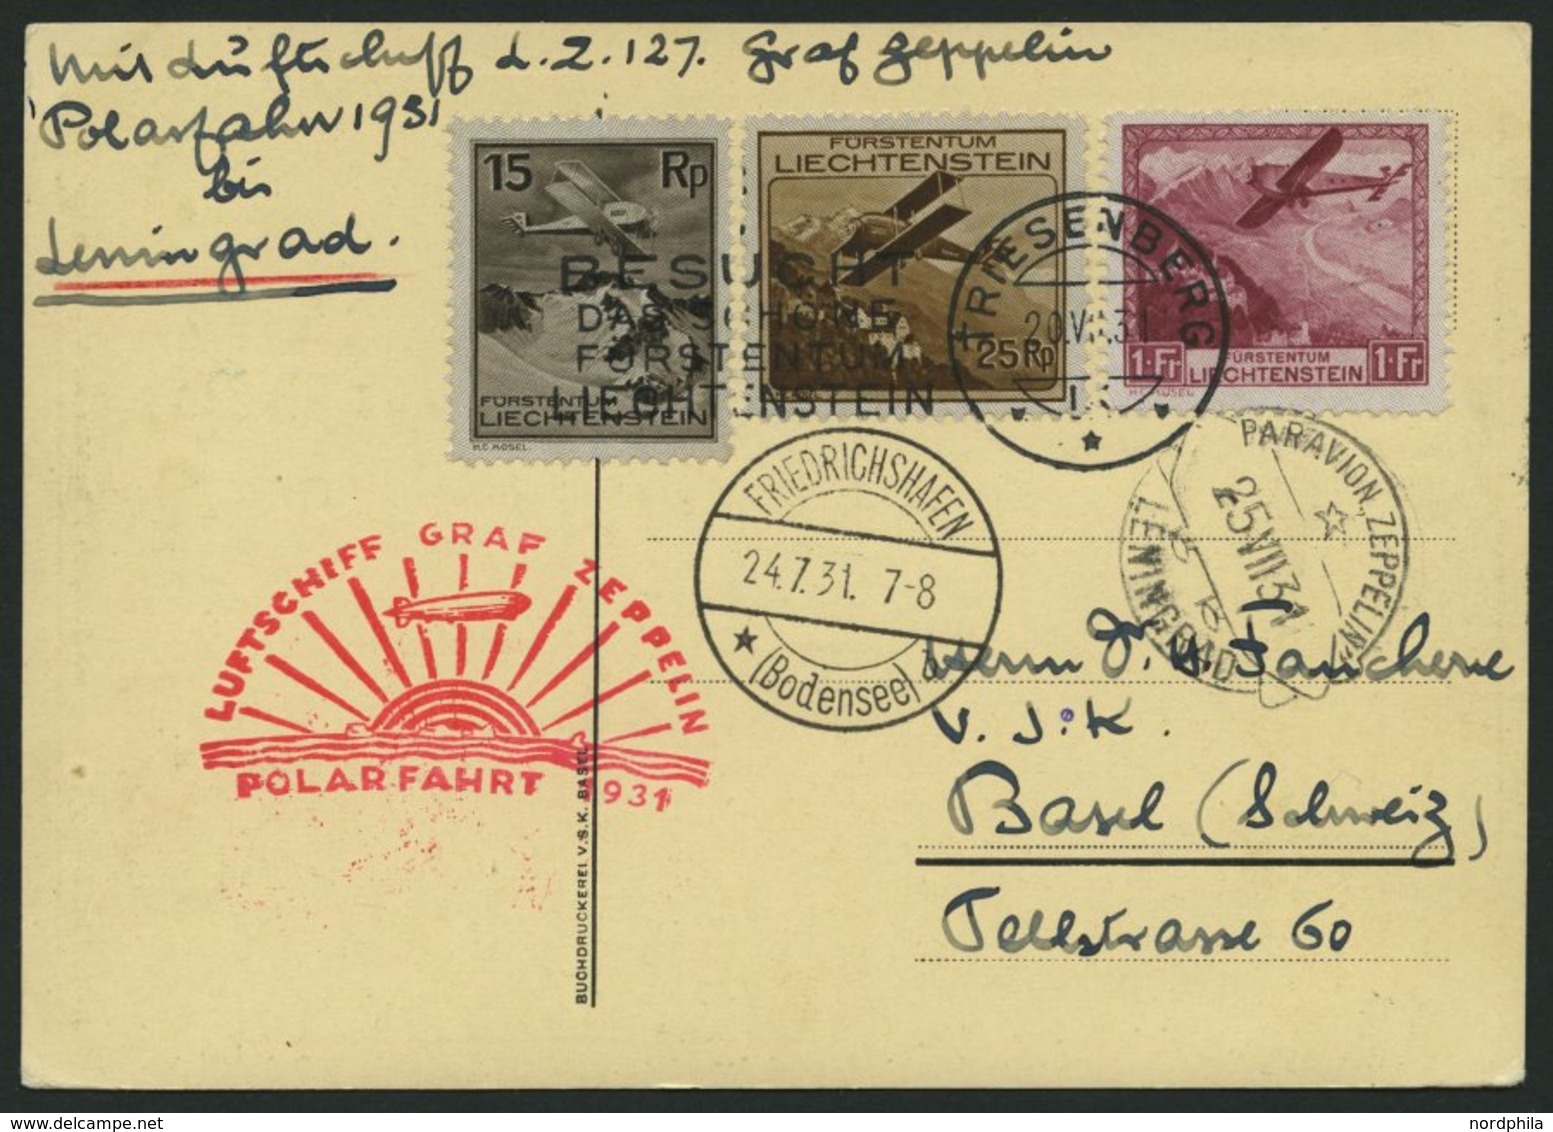 ZULEITUNGSPOST 119E BRIEF, Liechtenstein: 1931, Polarfahrt, Abgabe Leningrad, Prachtkarte - Poste Aérienne & Zeppelin